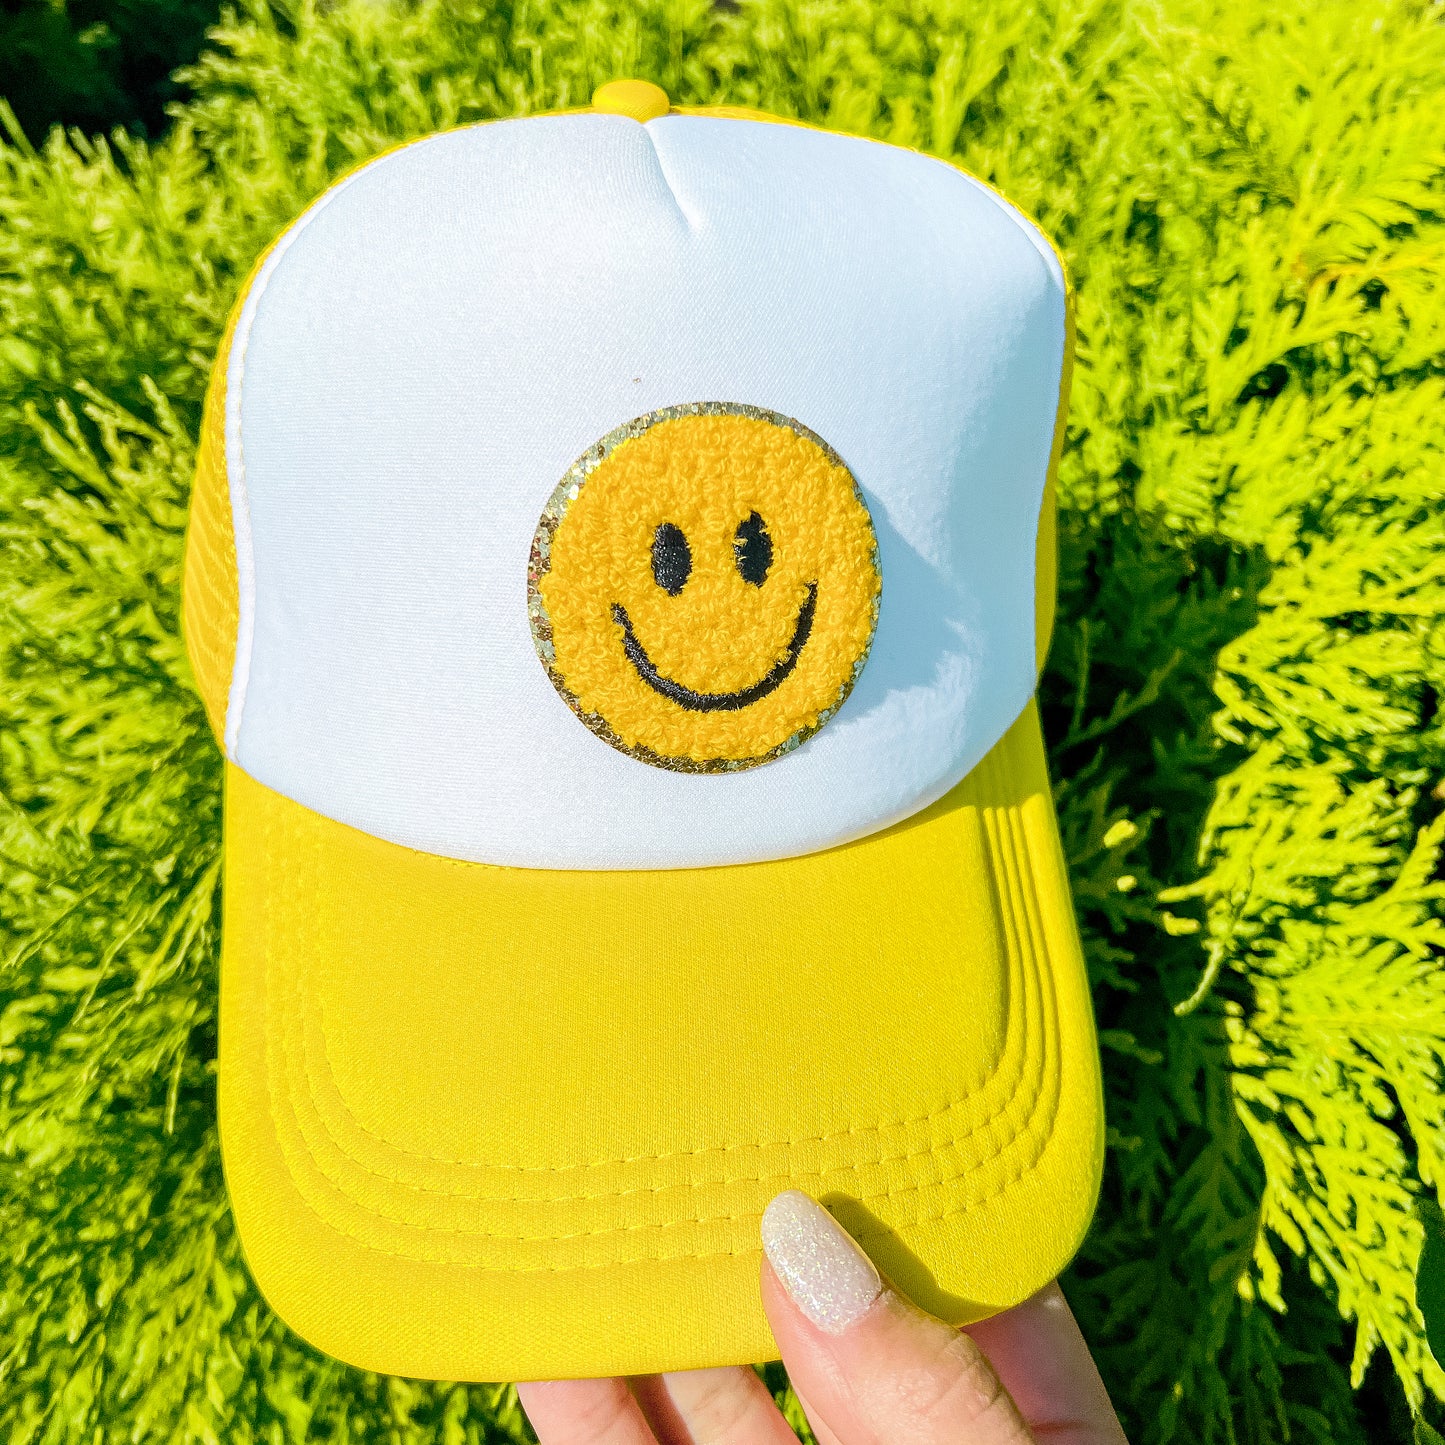 Sunny Days Trucker Hat